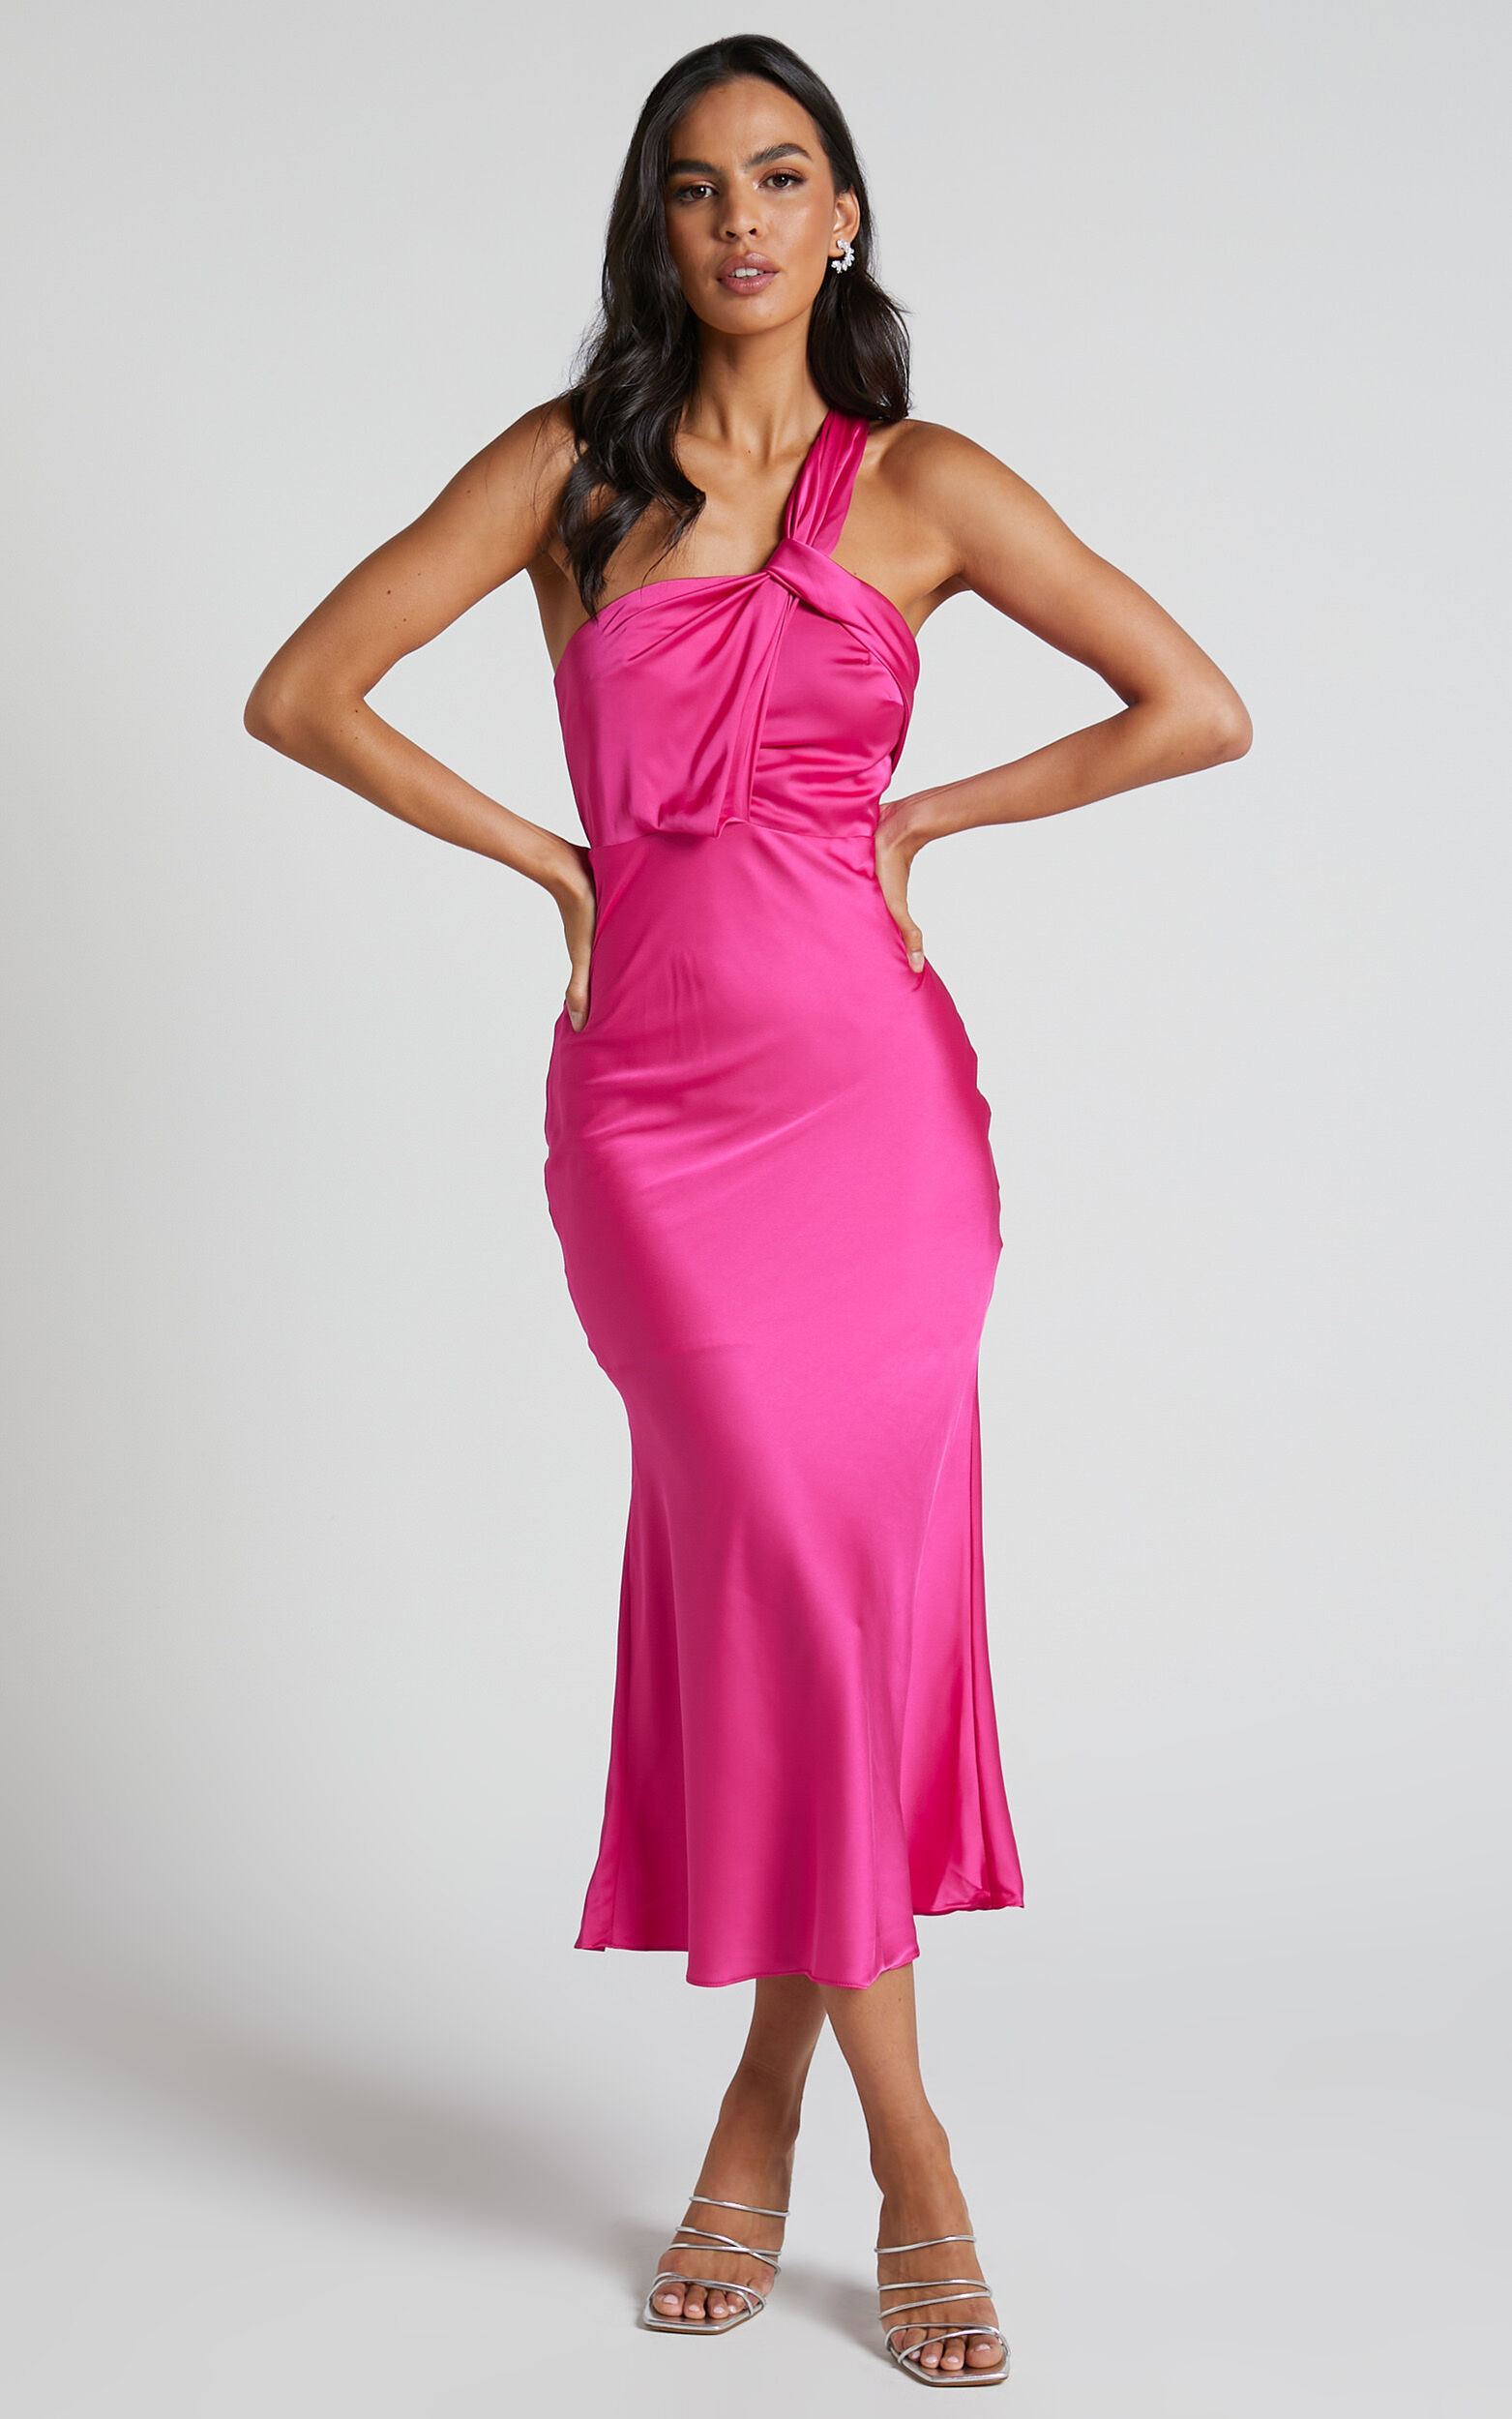 Carmella Midaxi Dress - One Shoulder Twist Detail Dress in Fuchsia - 06, PNK4